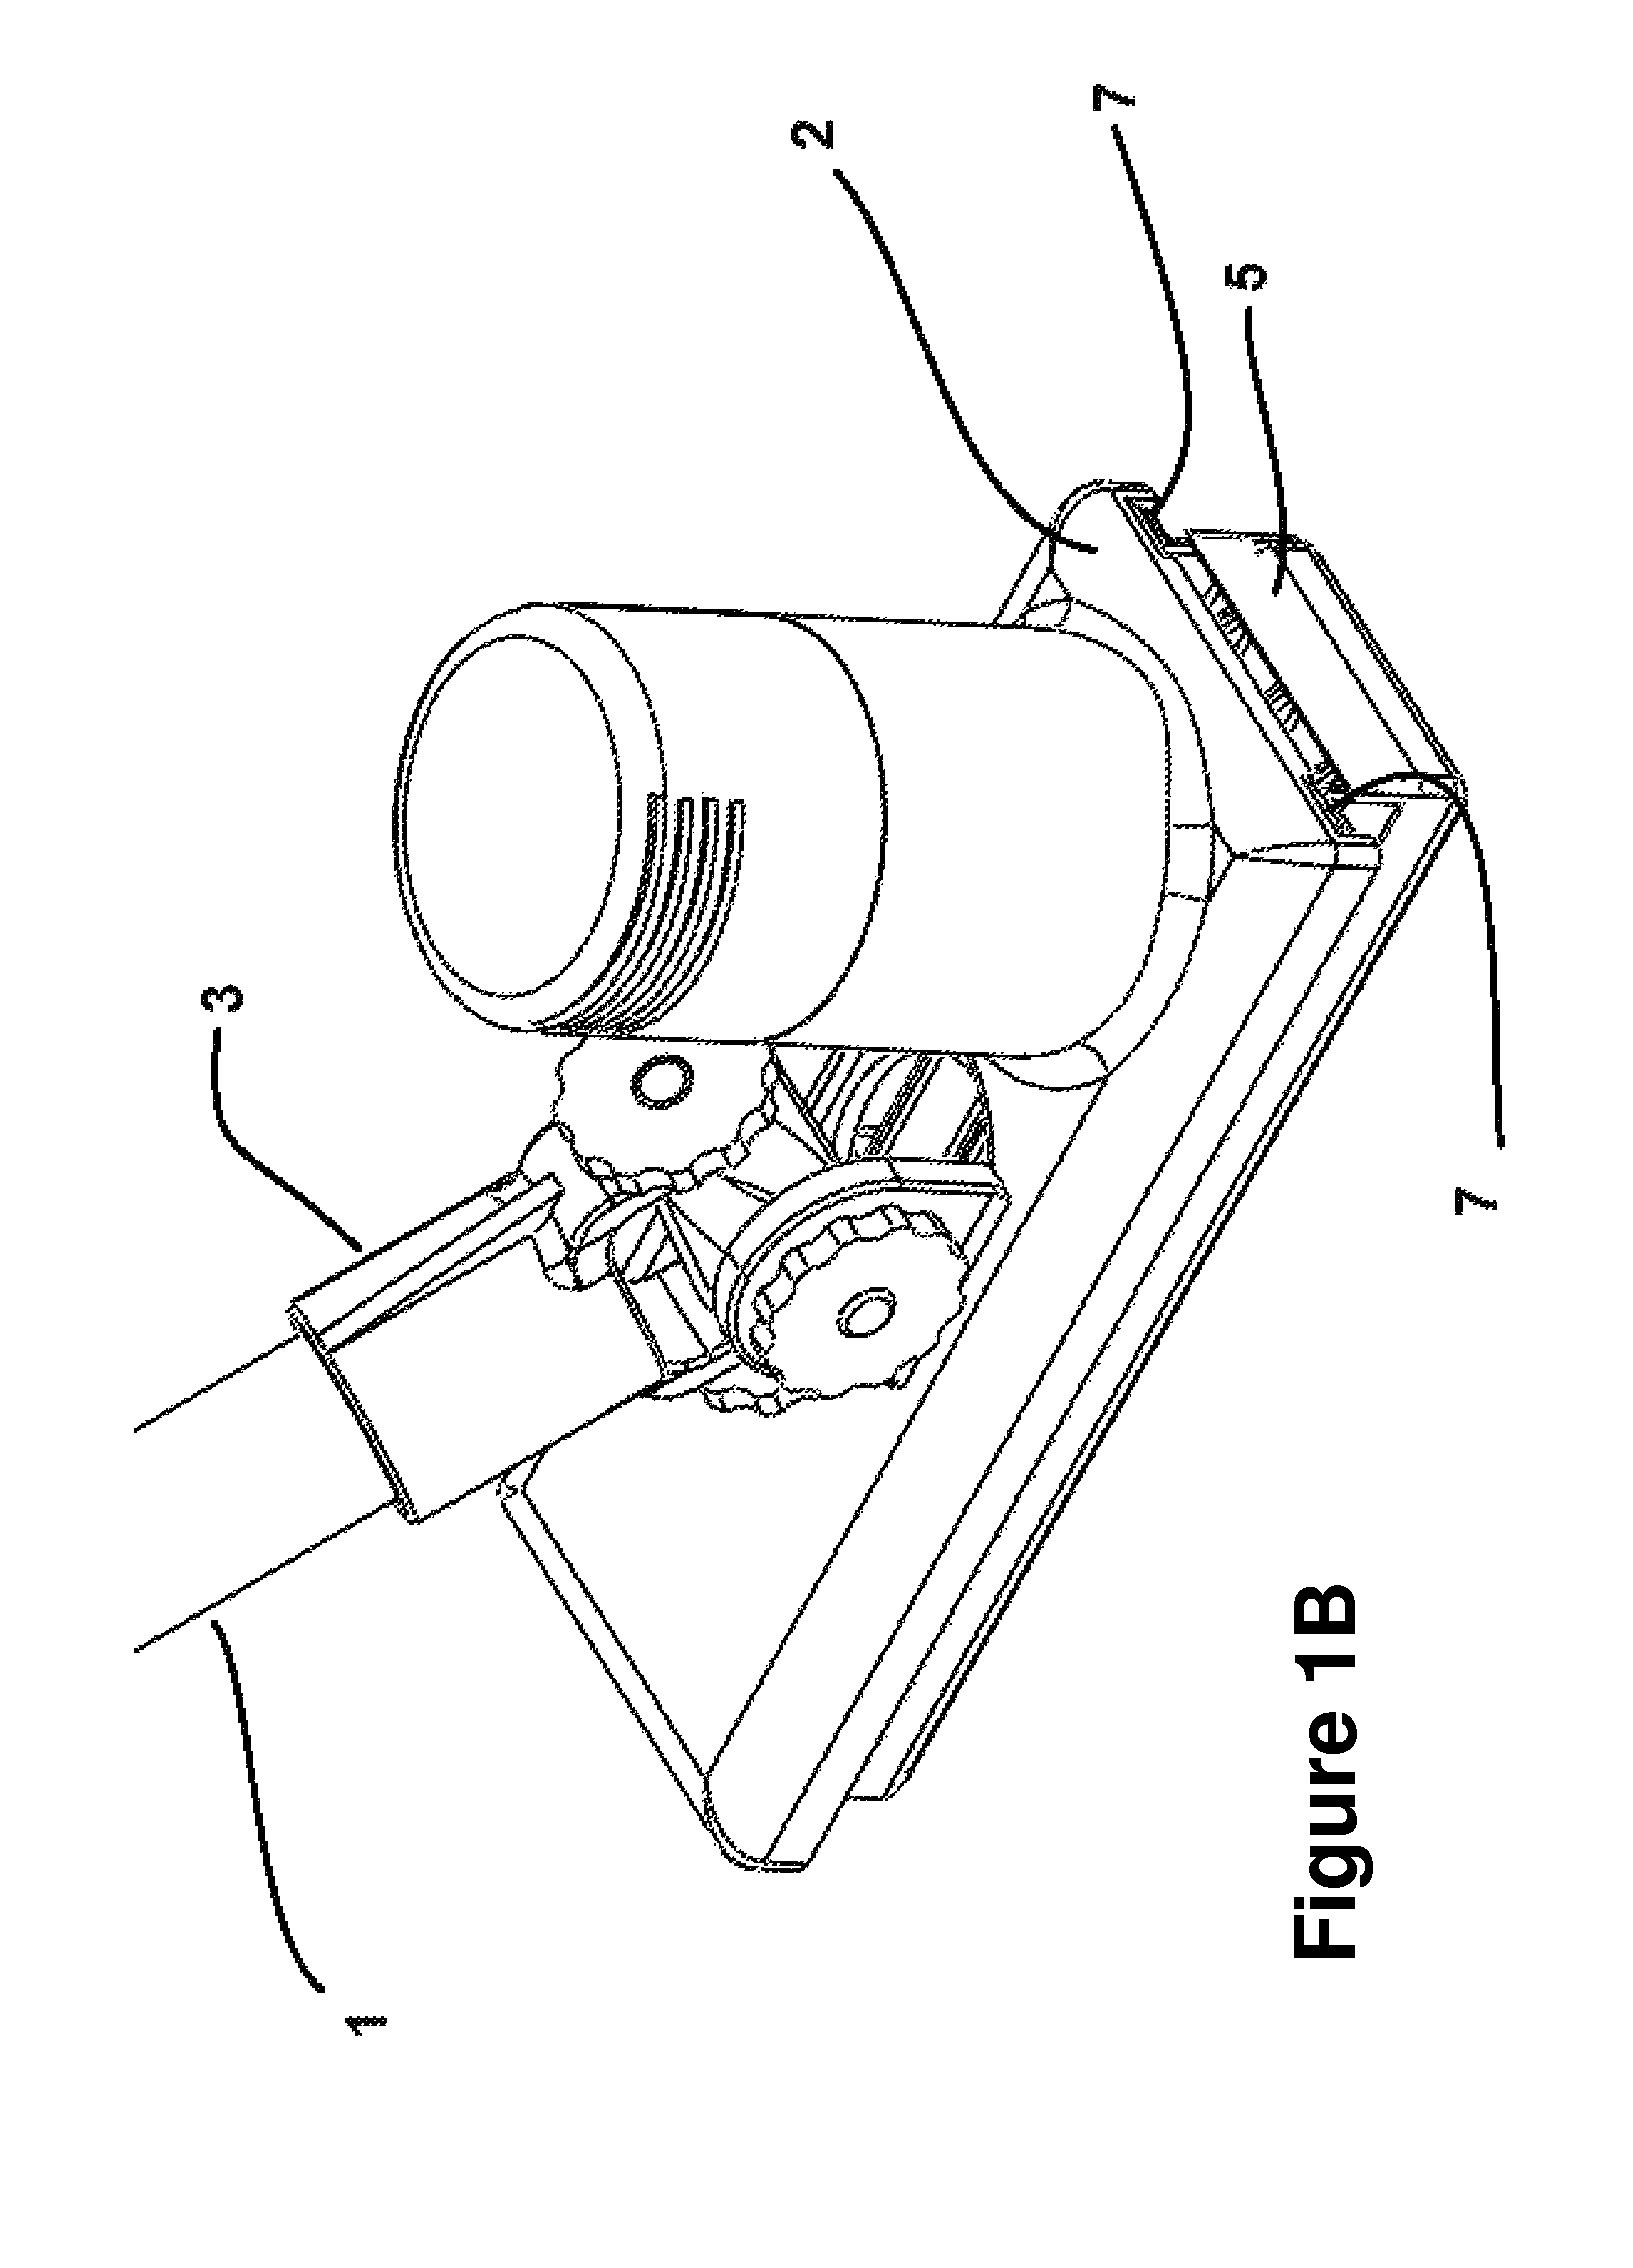 Curling broom incorporating a motor